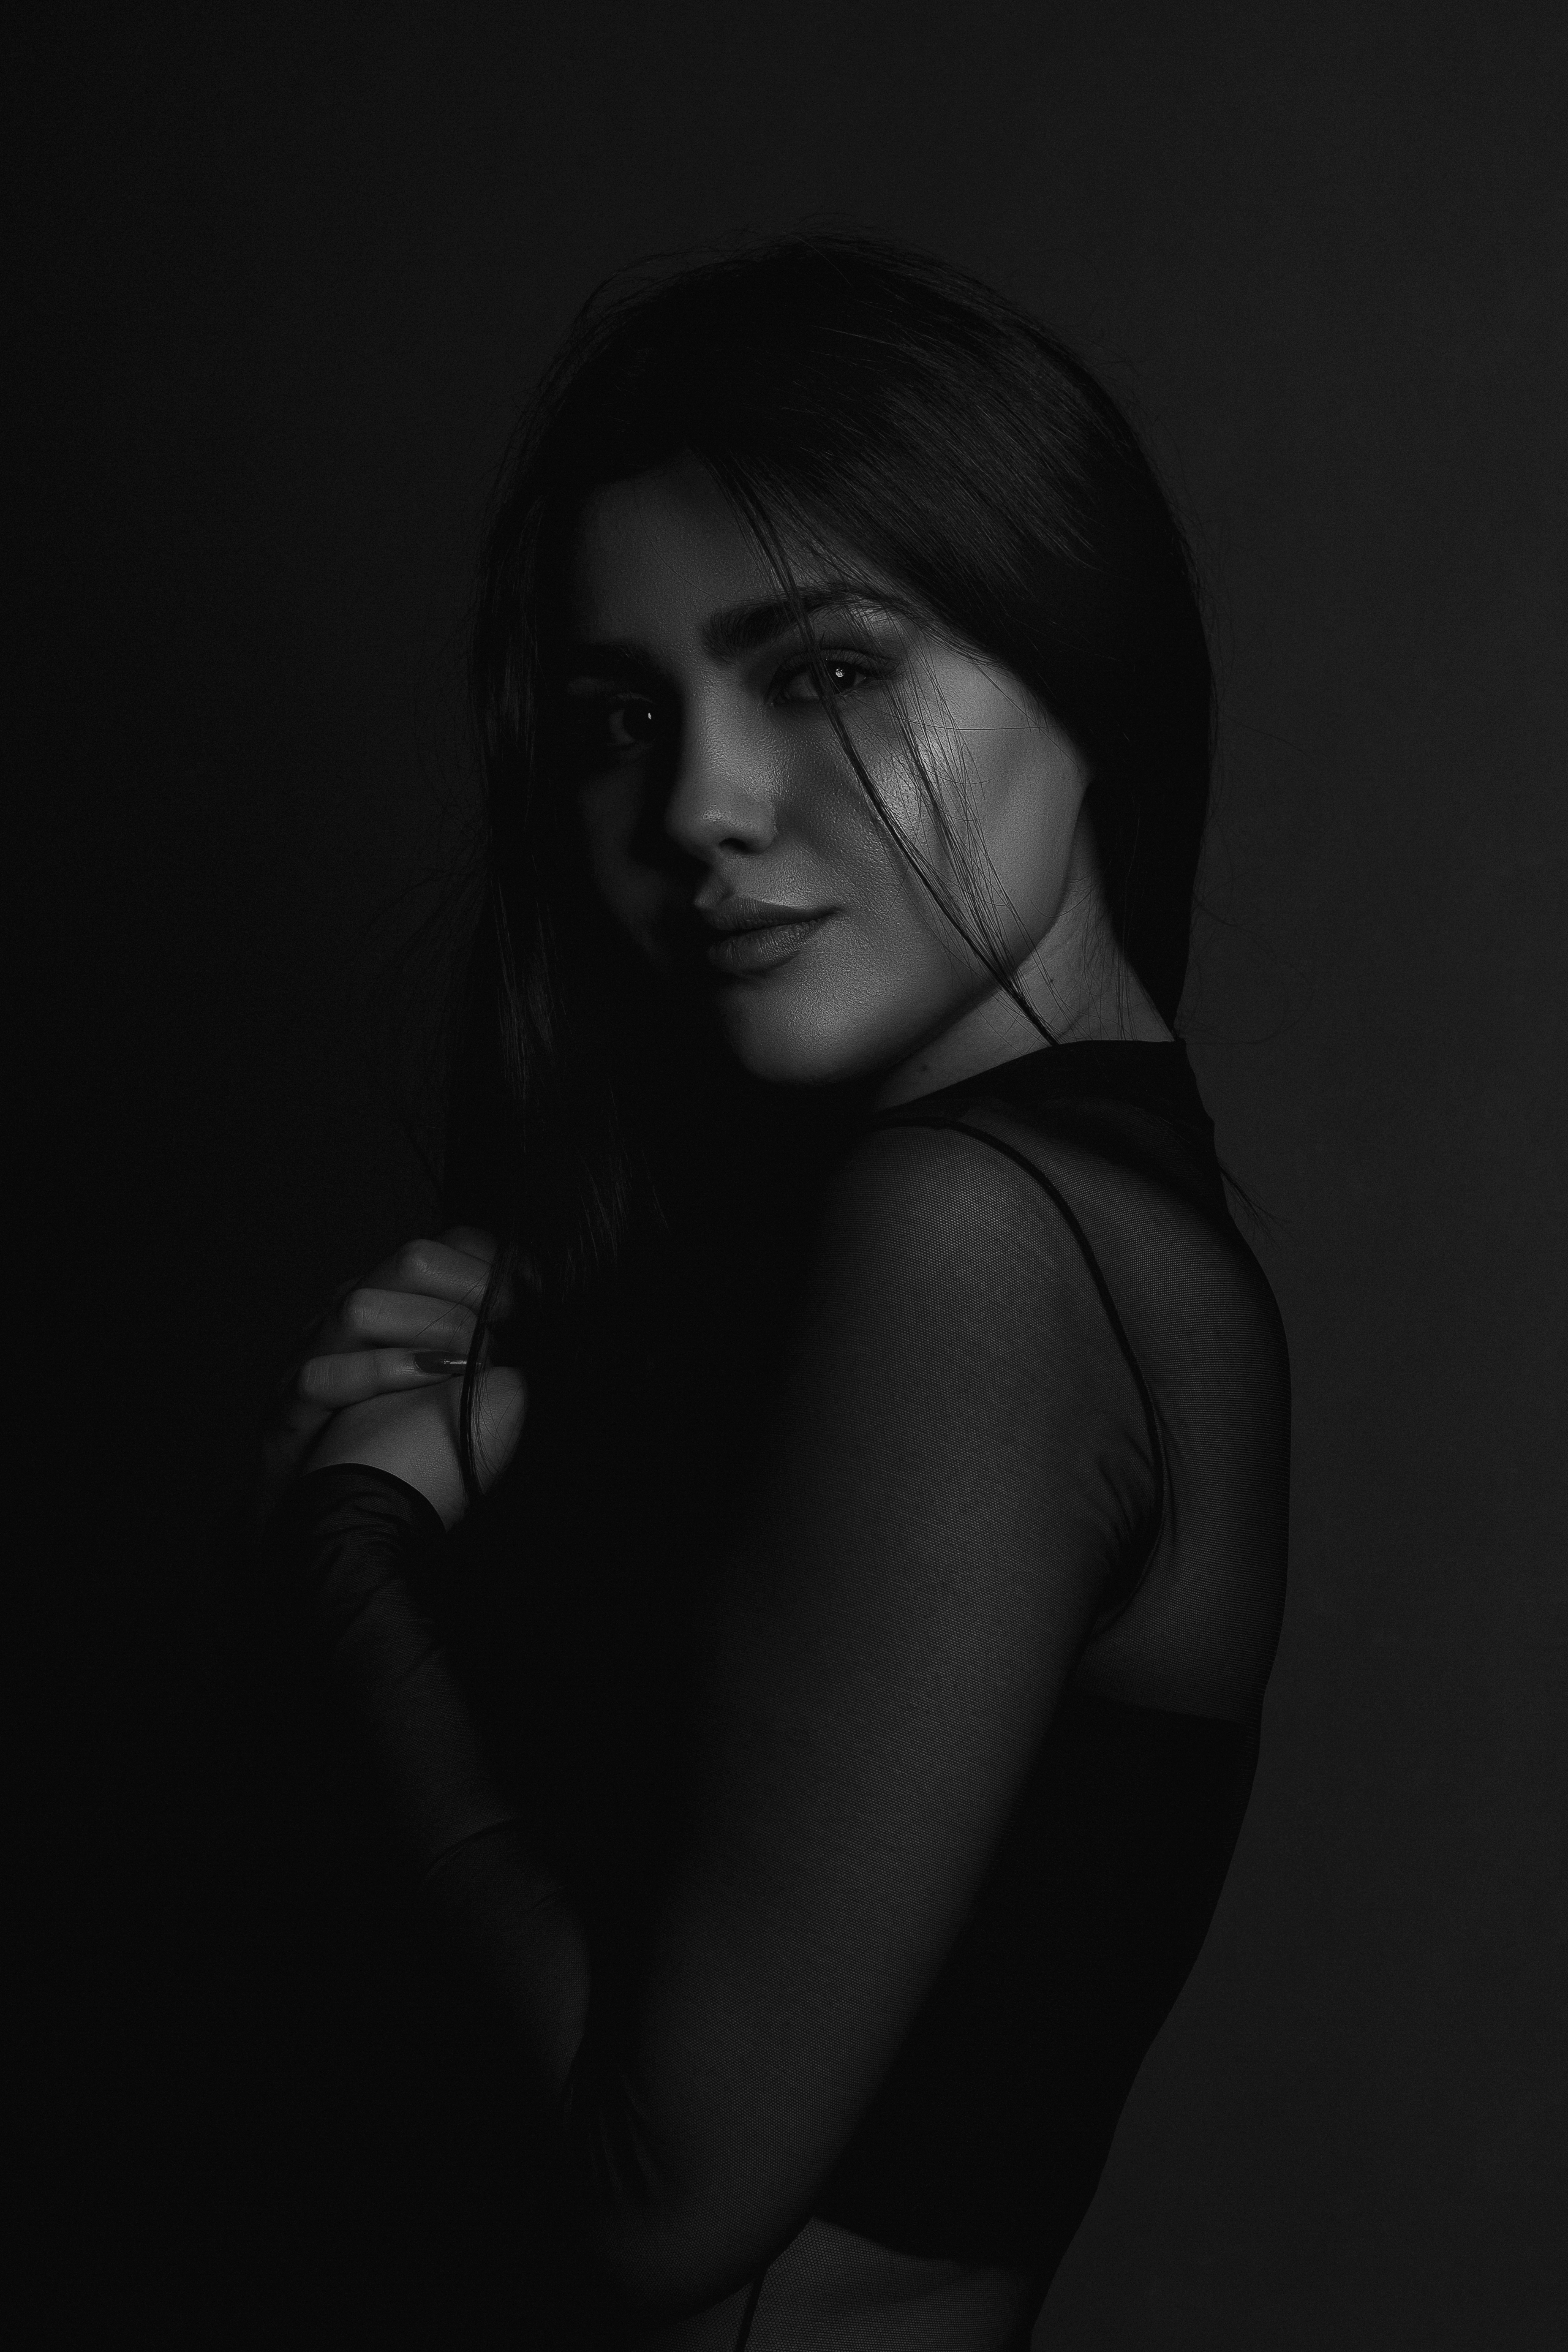 Beautiful girl Wallpaper 4K, Woman, Monochrome, Black/Dark, #2965